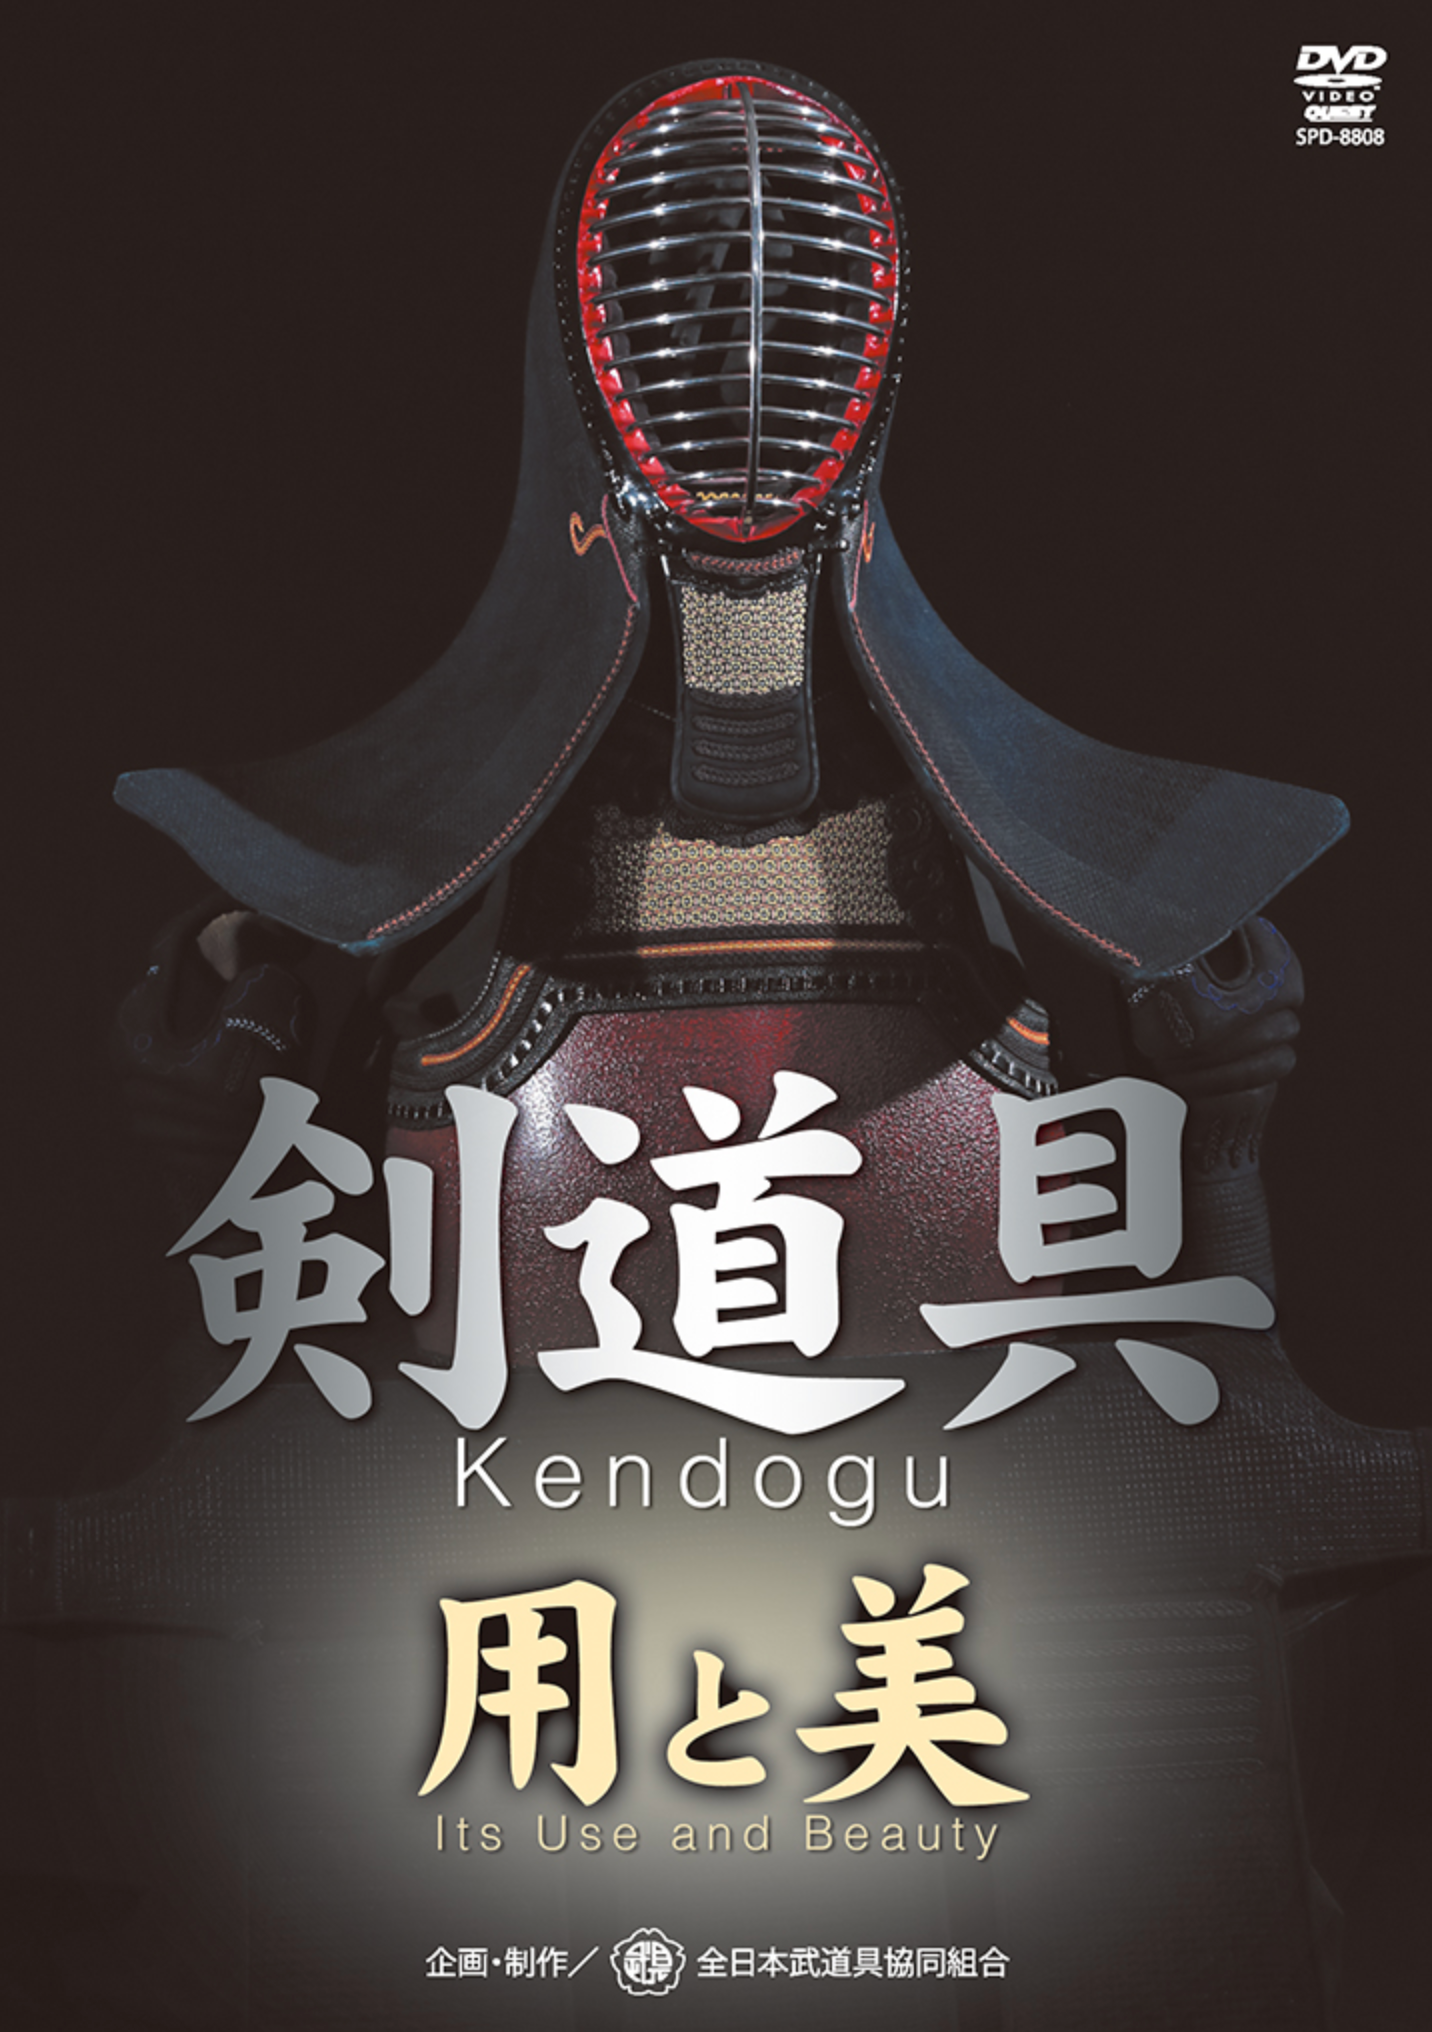 Kendogu DVD - Budovideos Inc